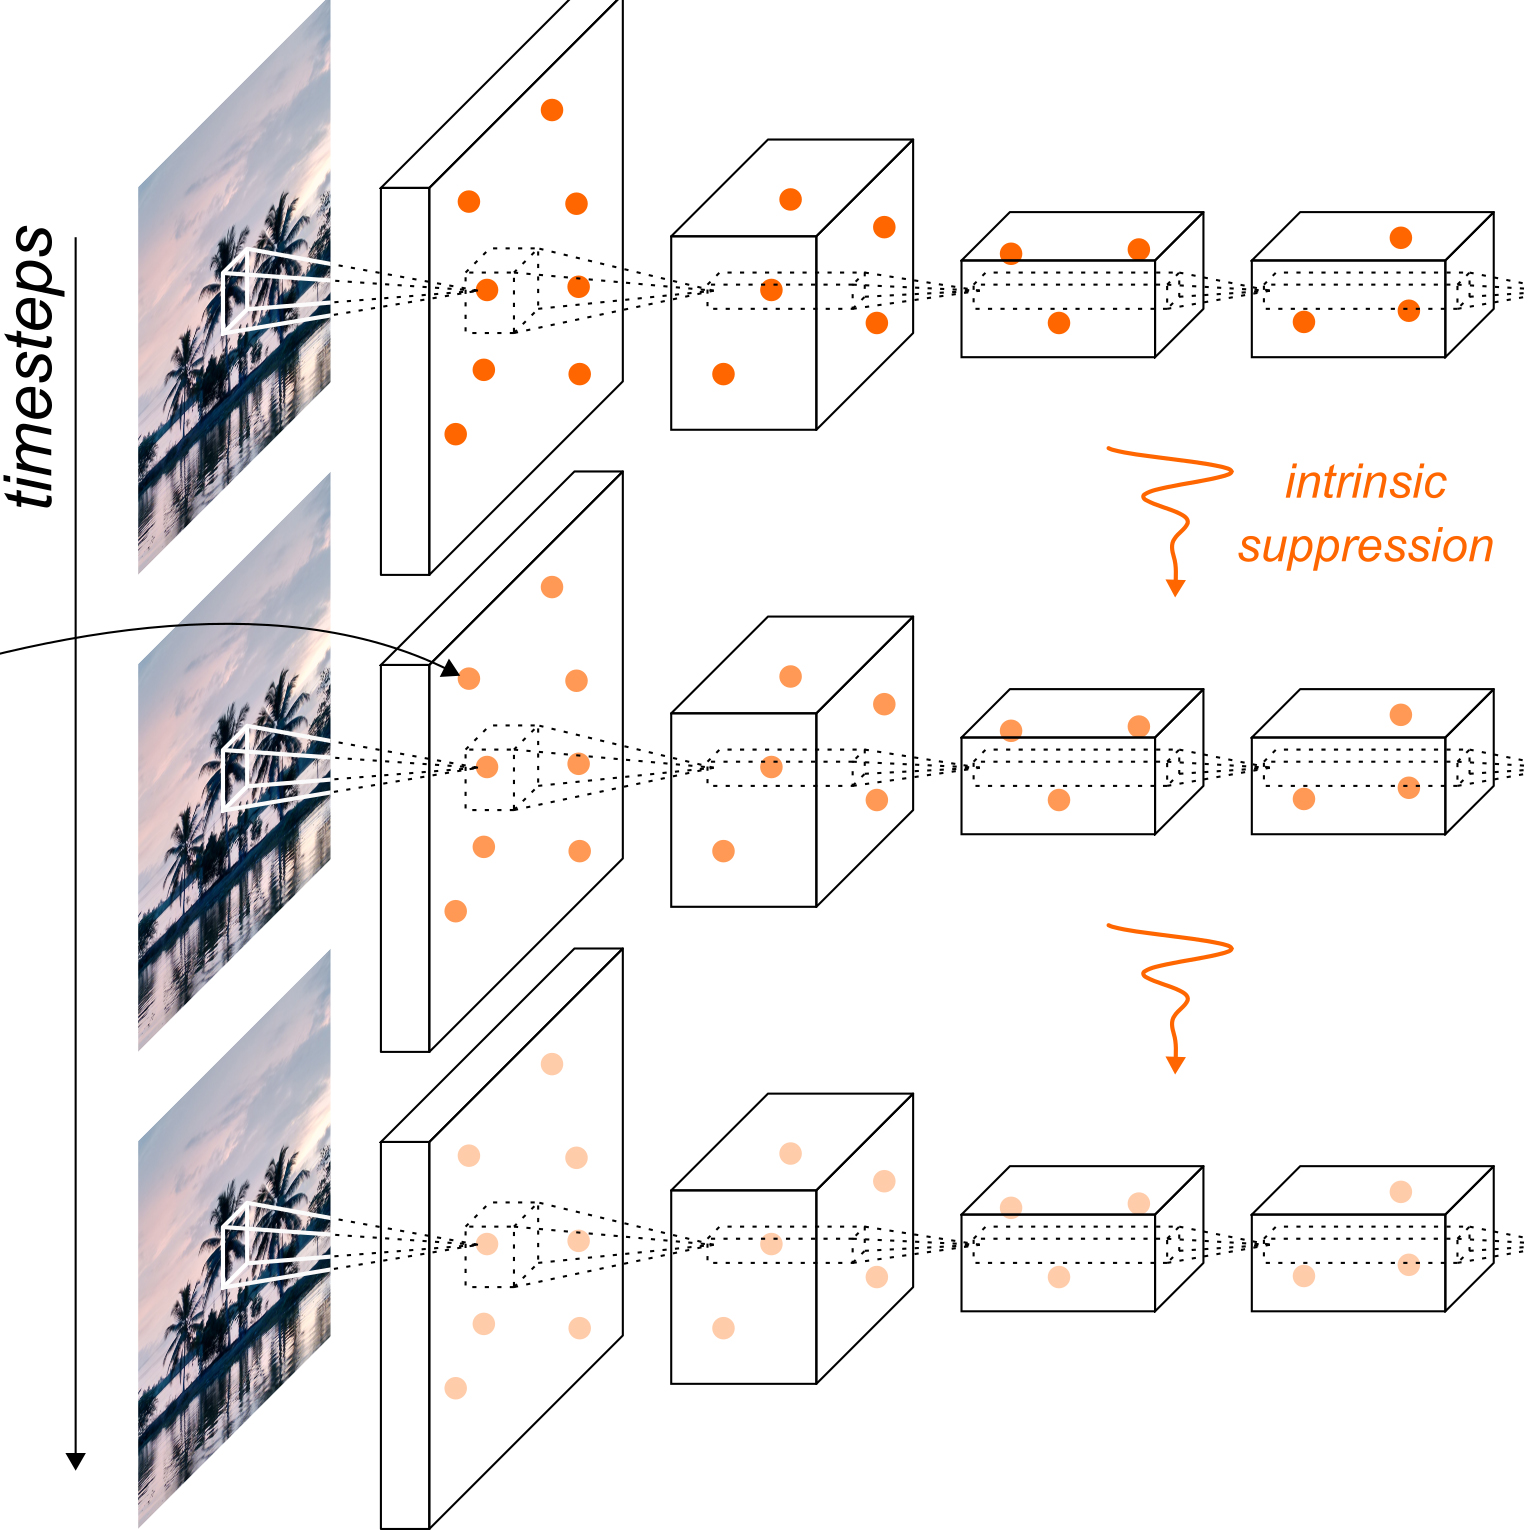 Adaptation in deep convolutional neural networks